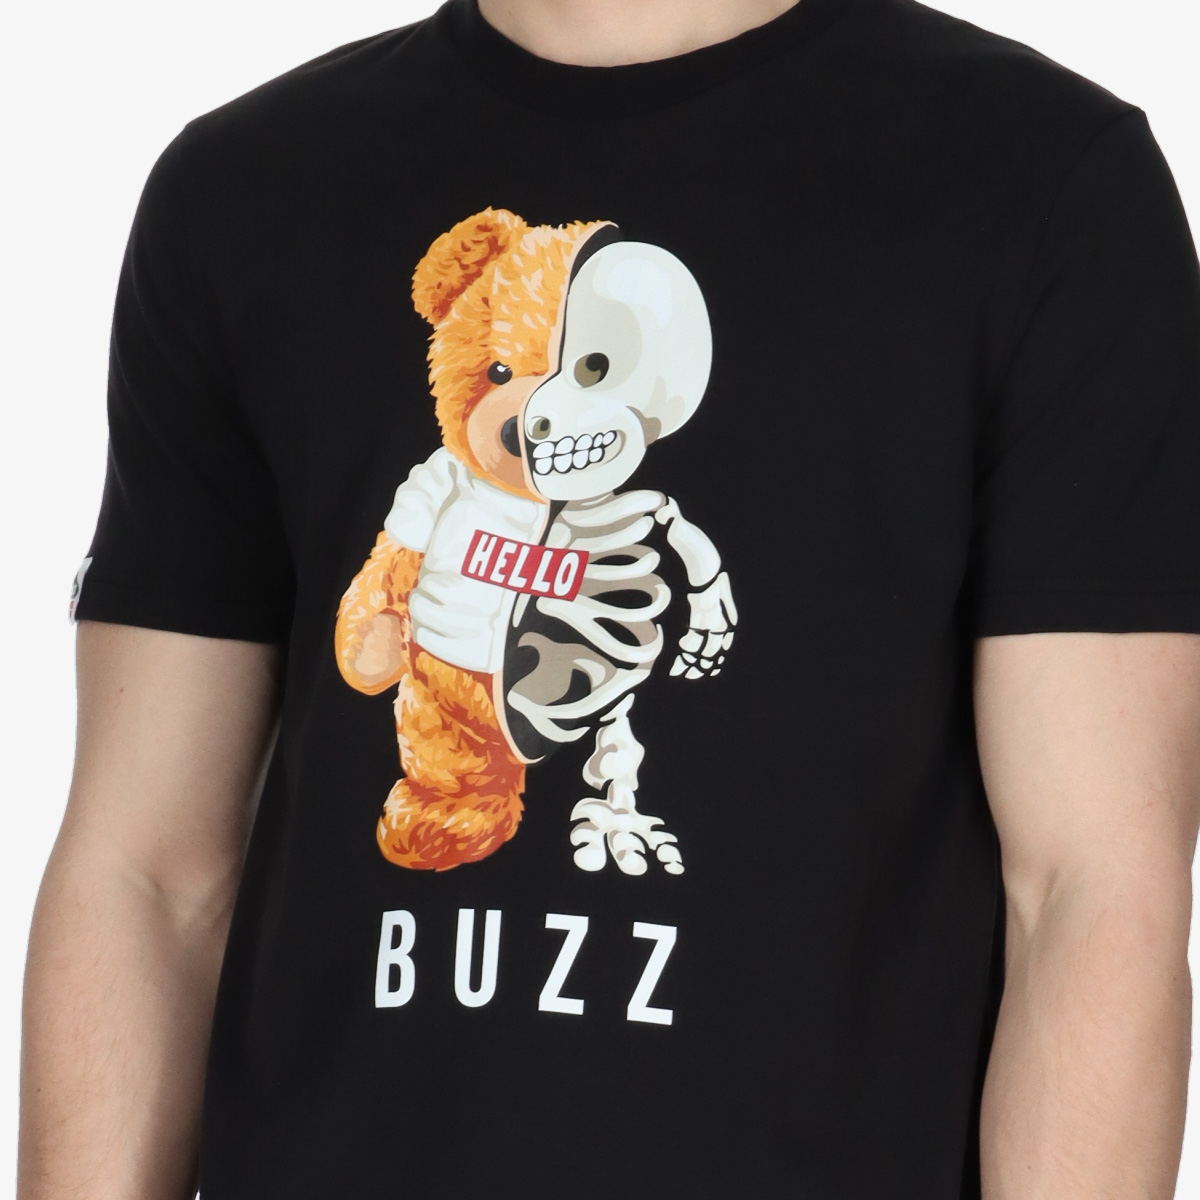 BUZZ Тенискa SKELET TEDDY T-SHIRT 